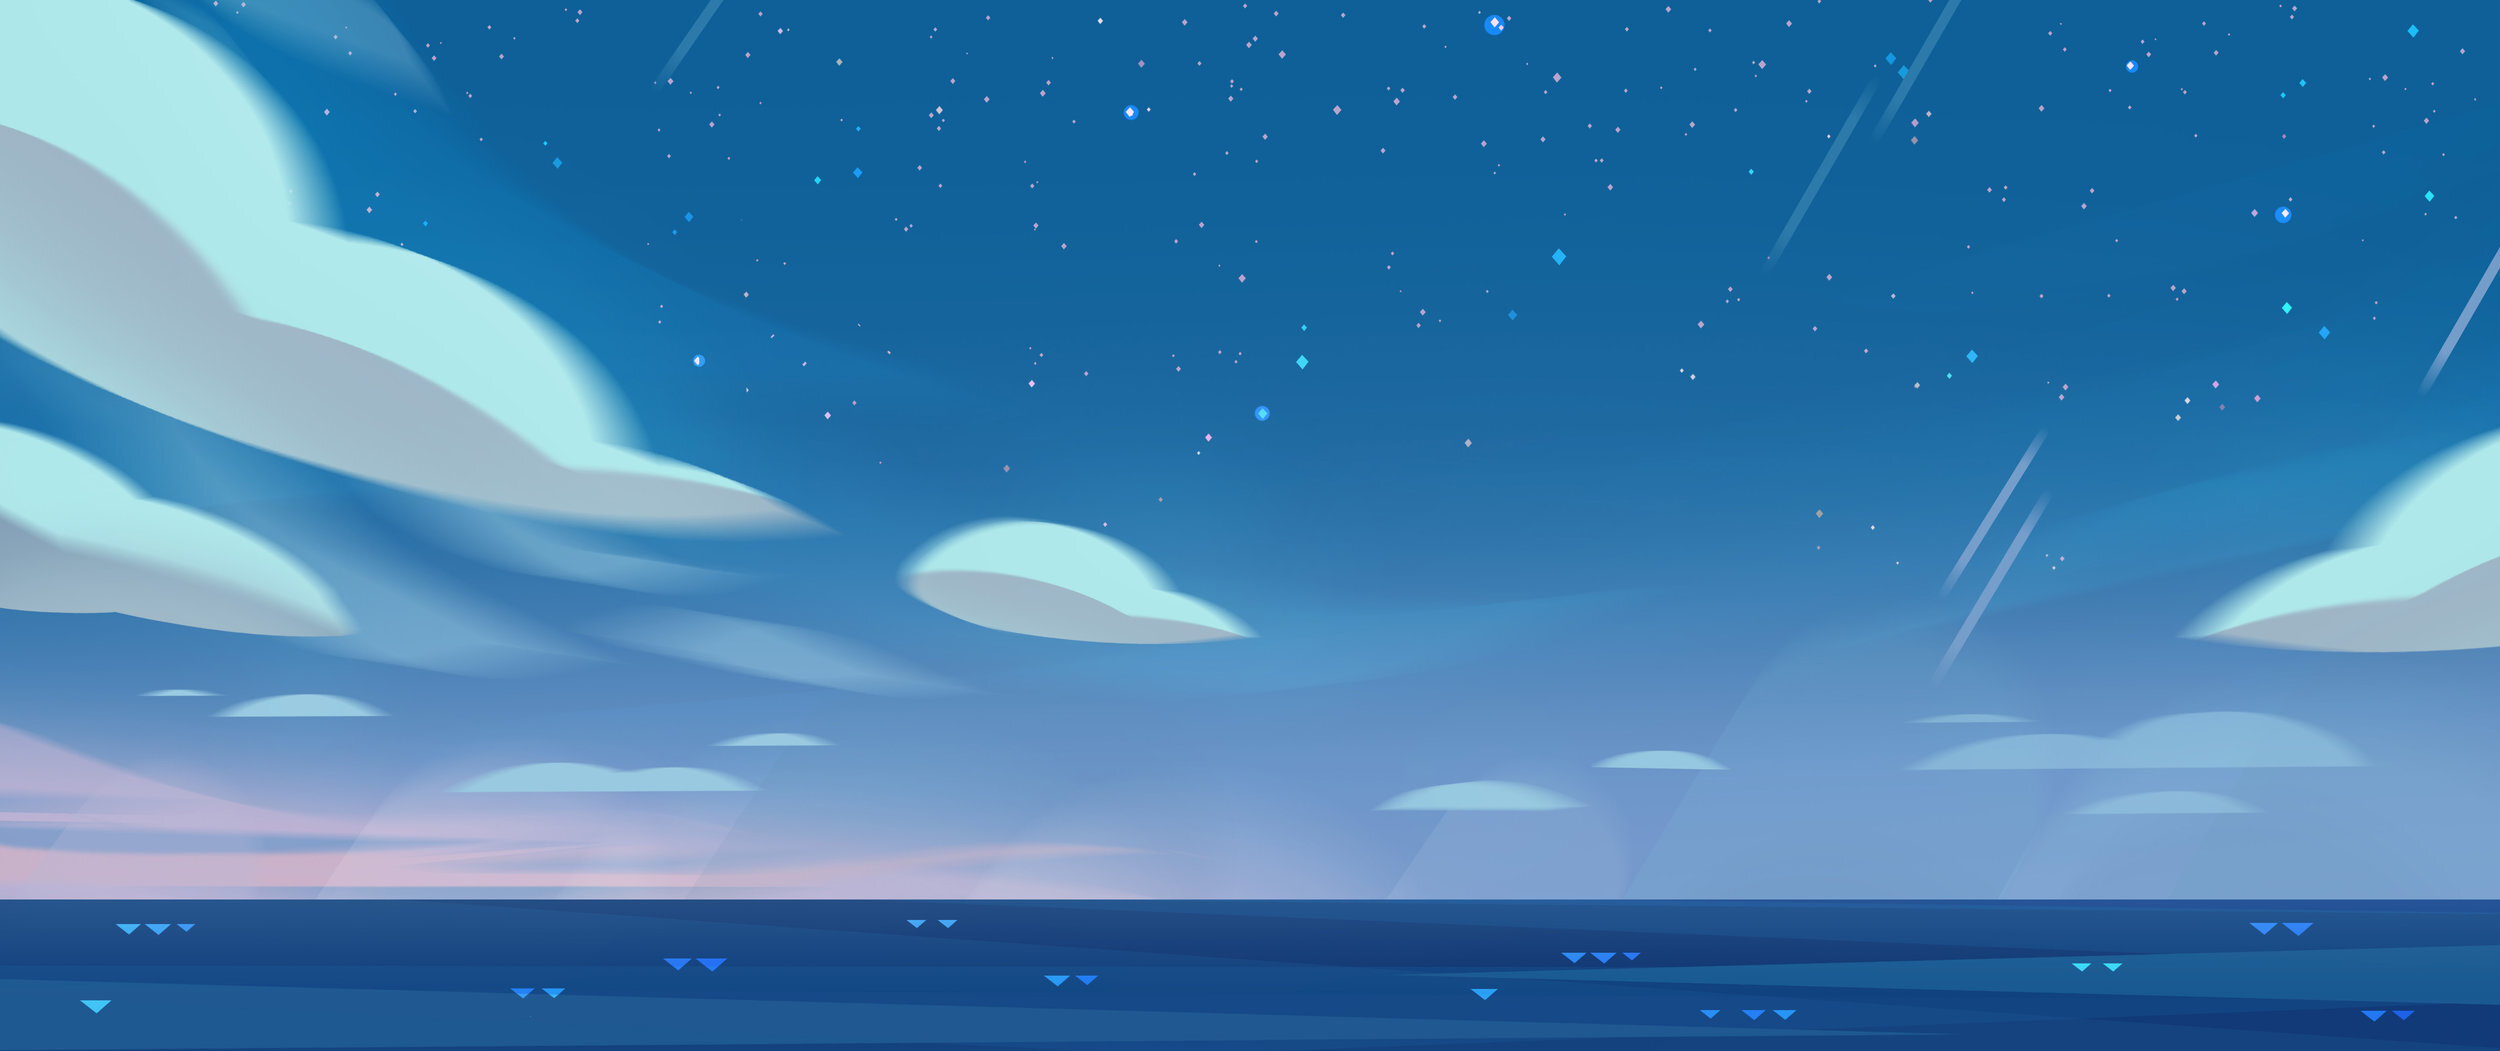 Steven Universe Star Background